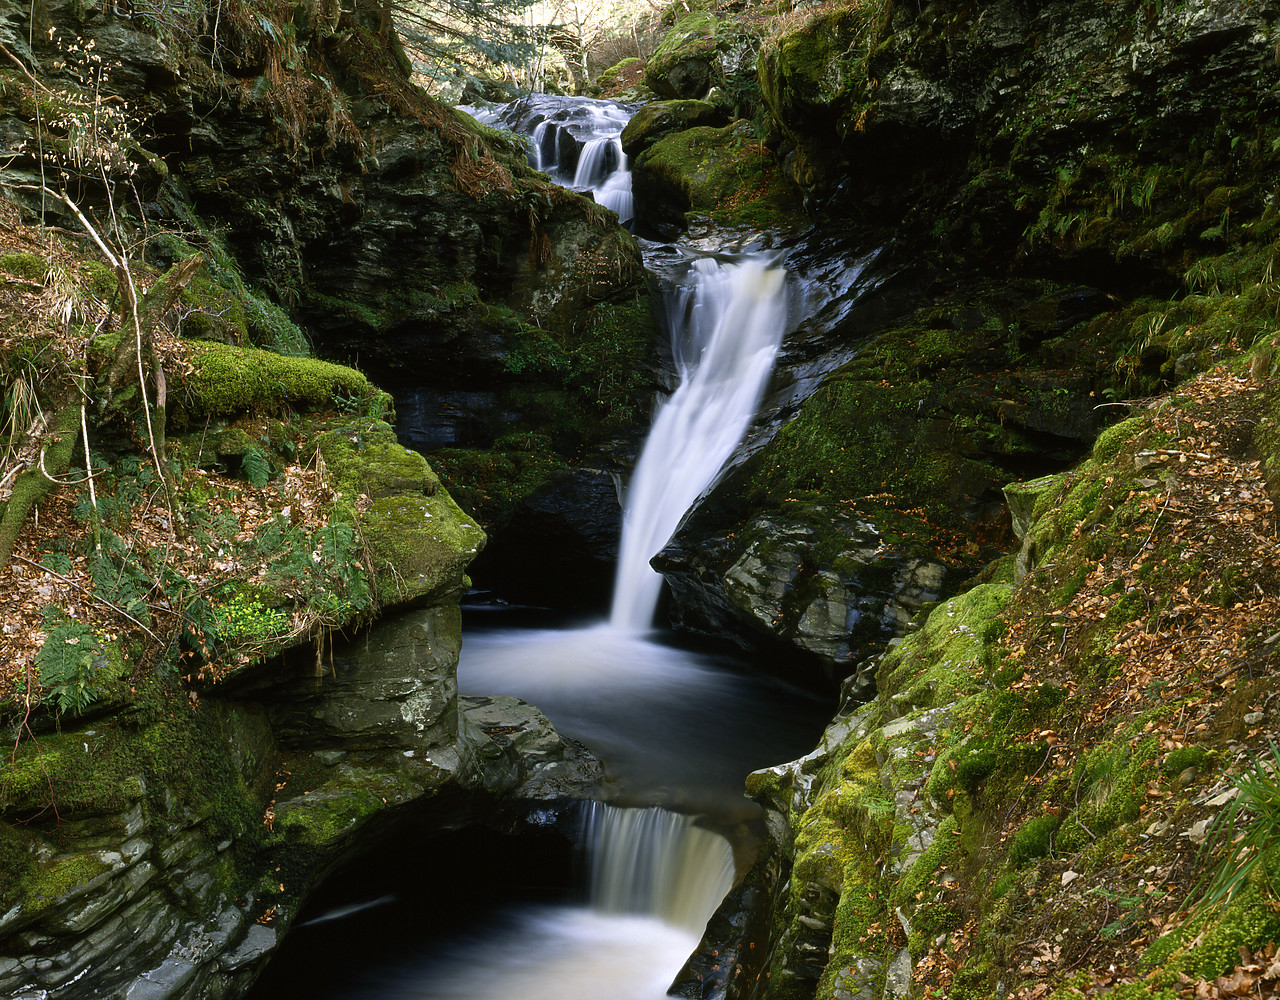 #923963-1 - Waterfall at Acharn Burn, Acharn, Pethshire, Scotland